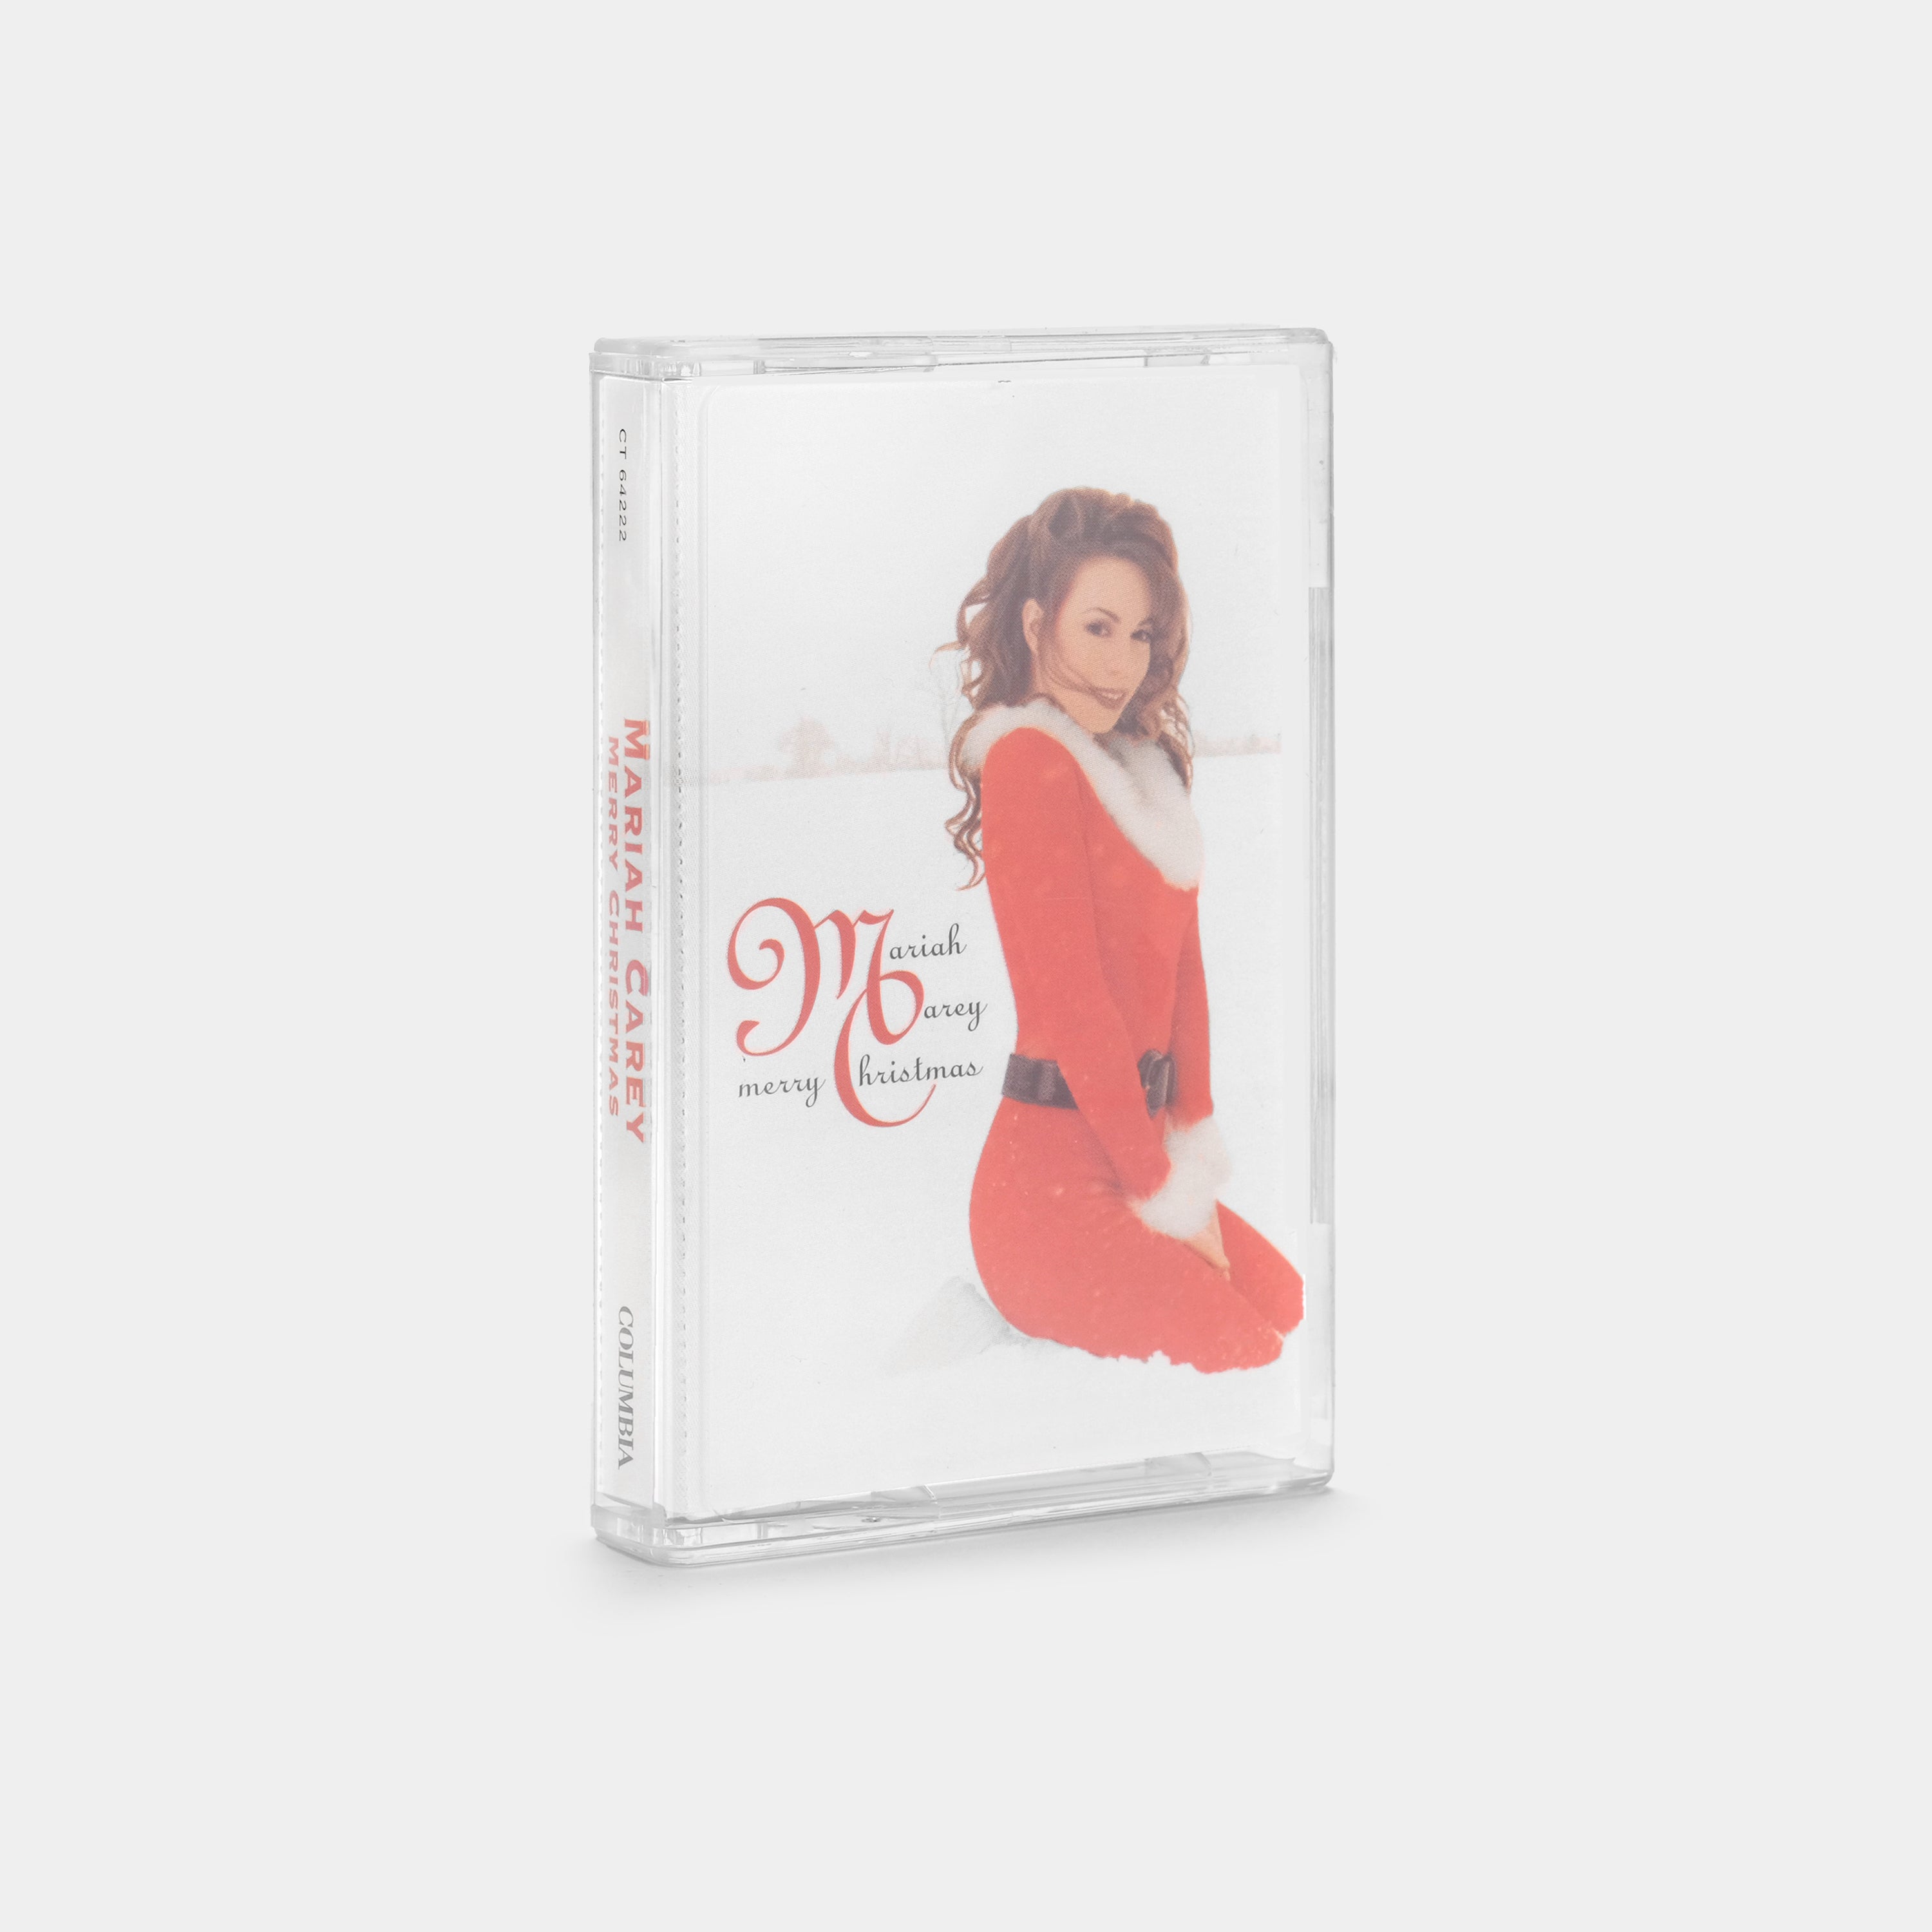 Mariah Carey - Merry Christmas Cassette Tape